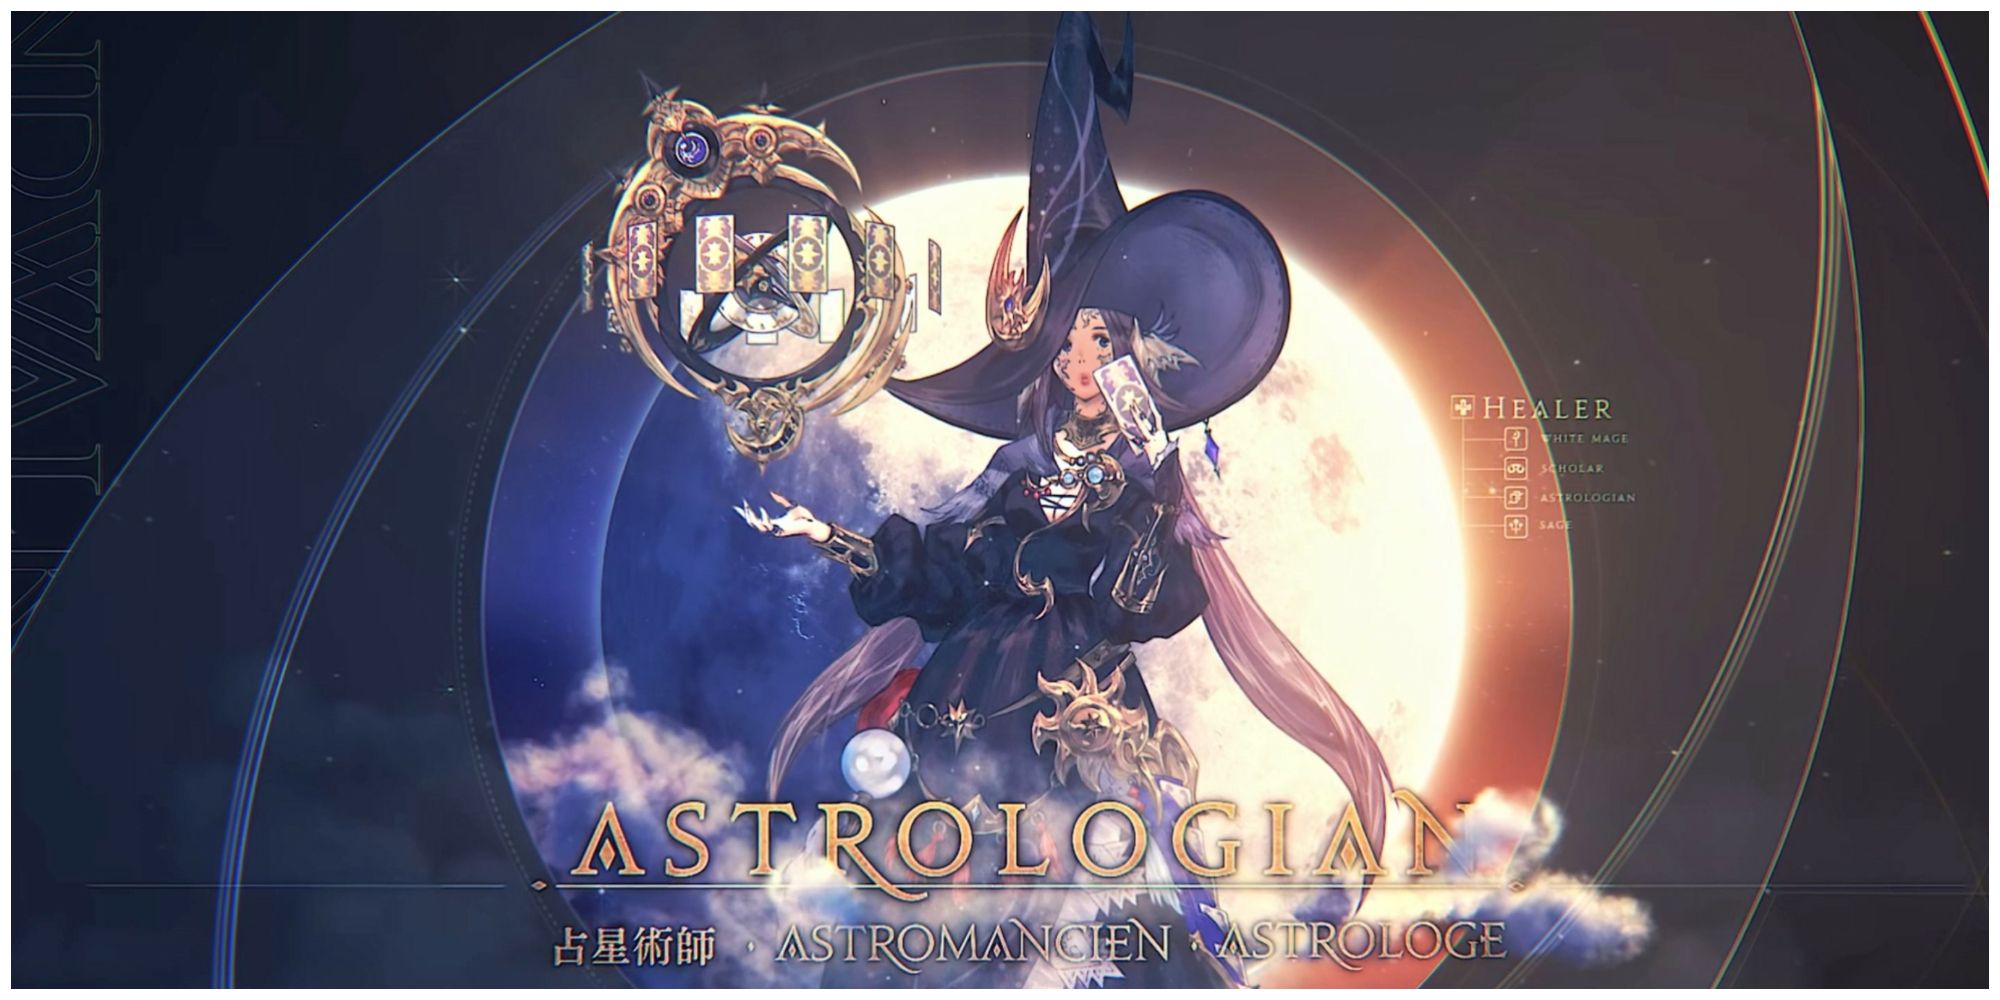 Astrologian class from Final Fantasy 14.